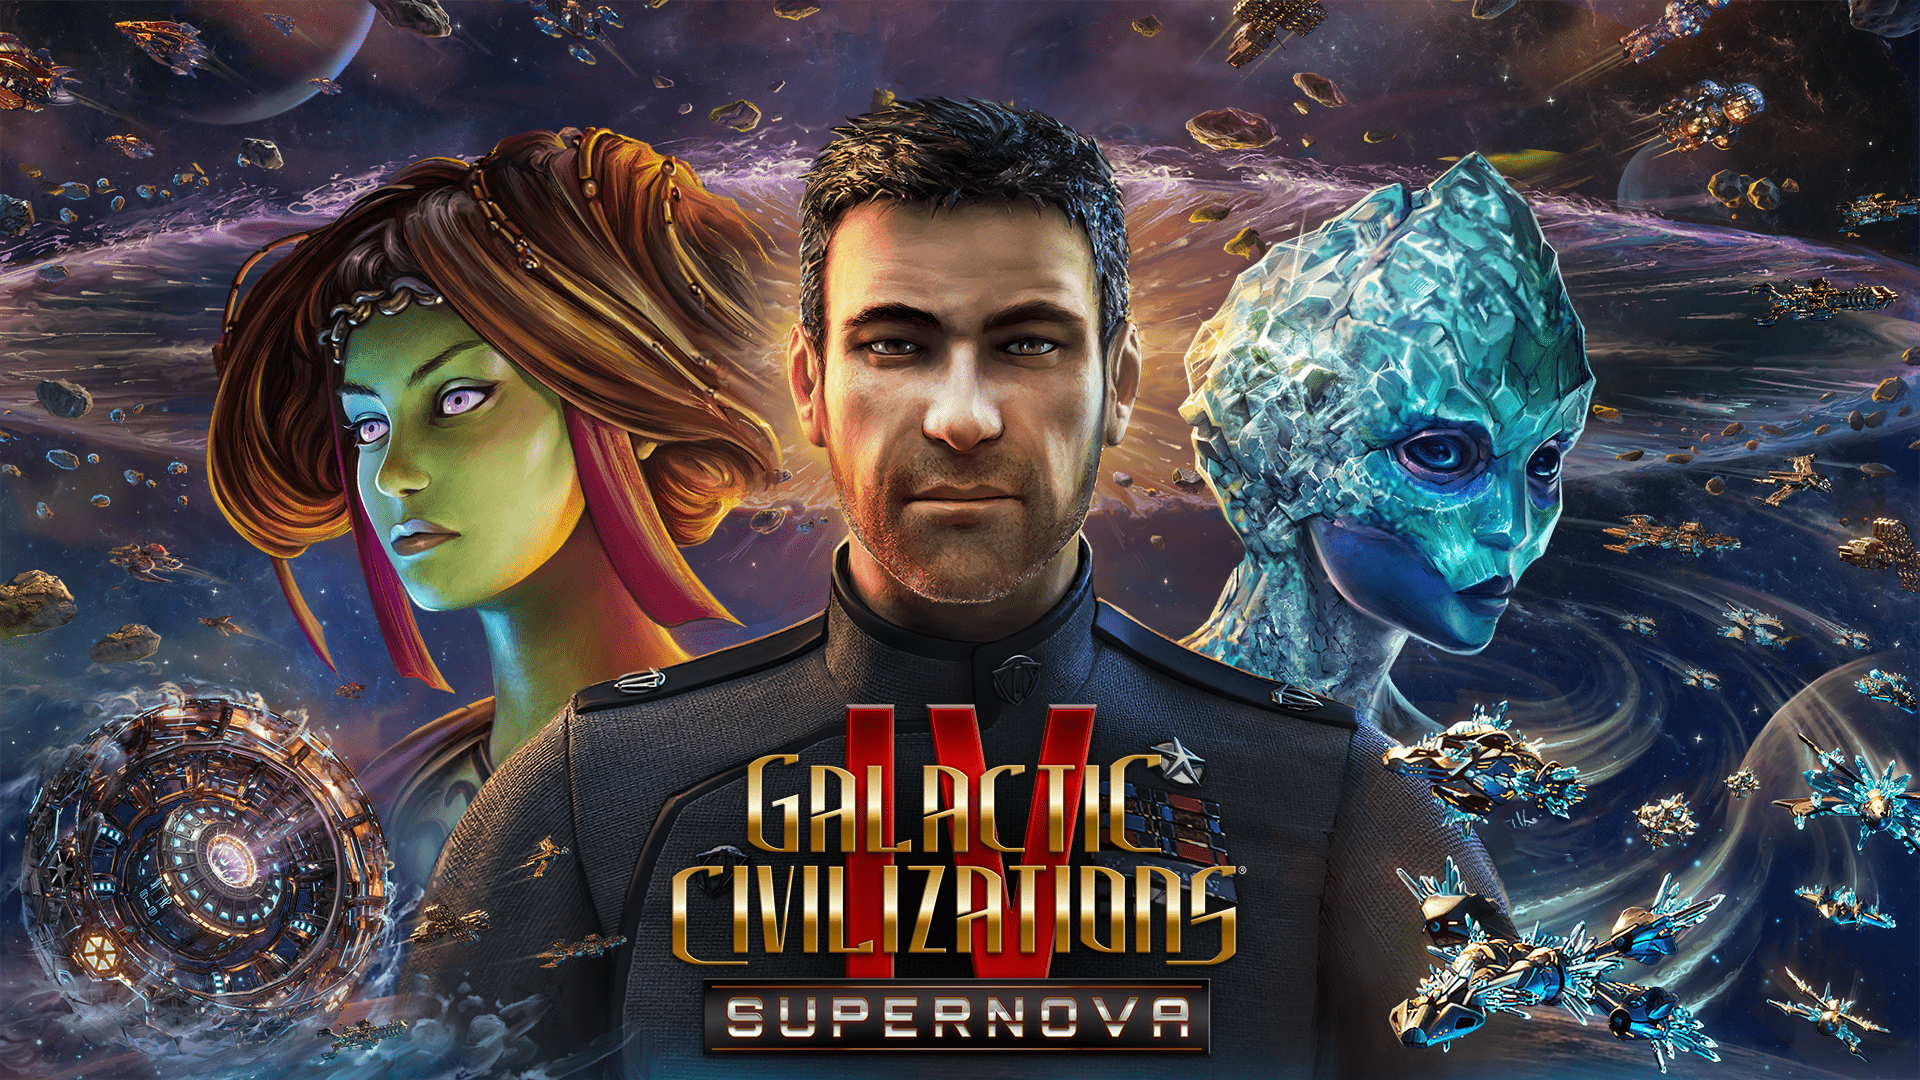 Galactic Civilizations 4: Supernova Announced!